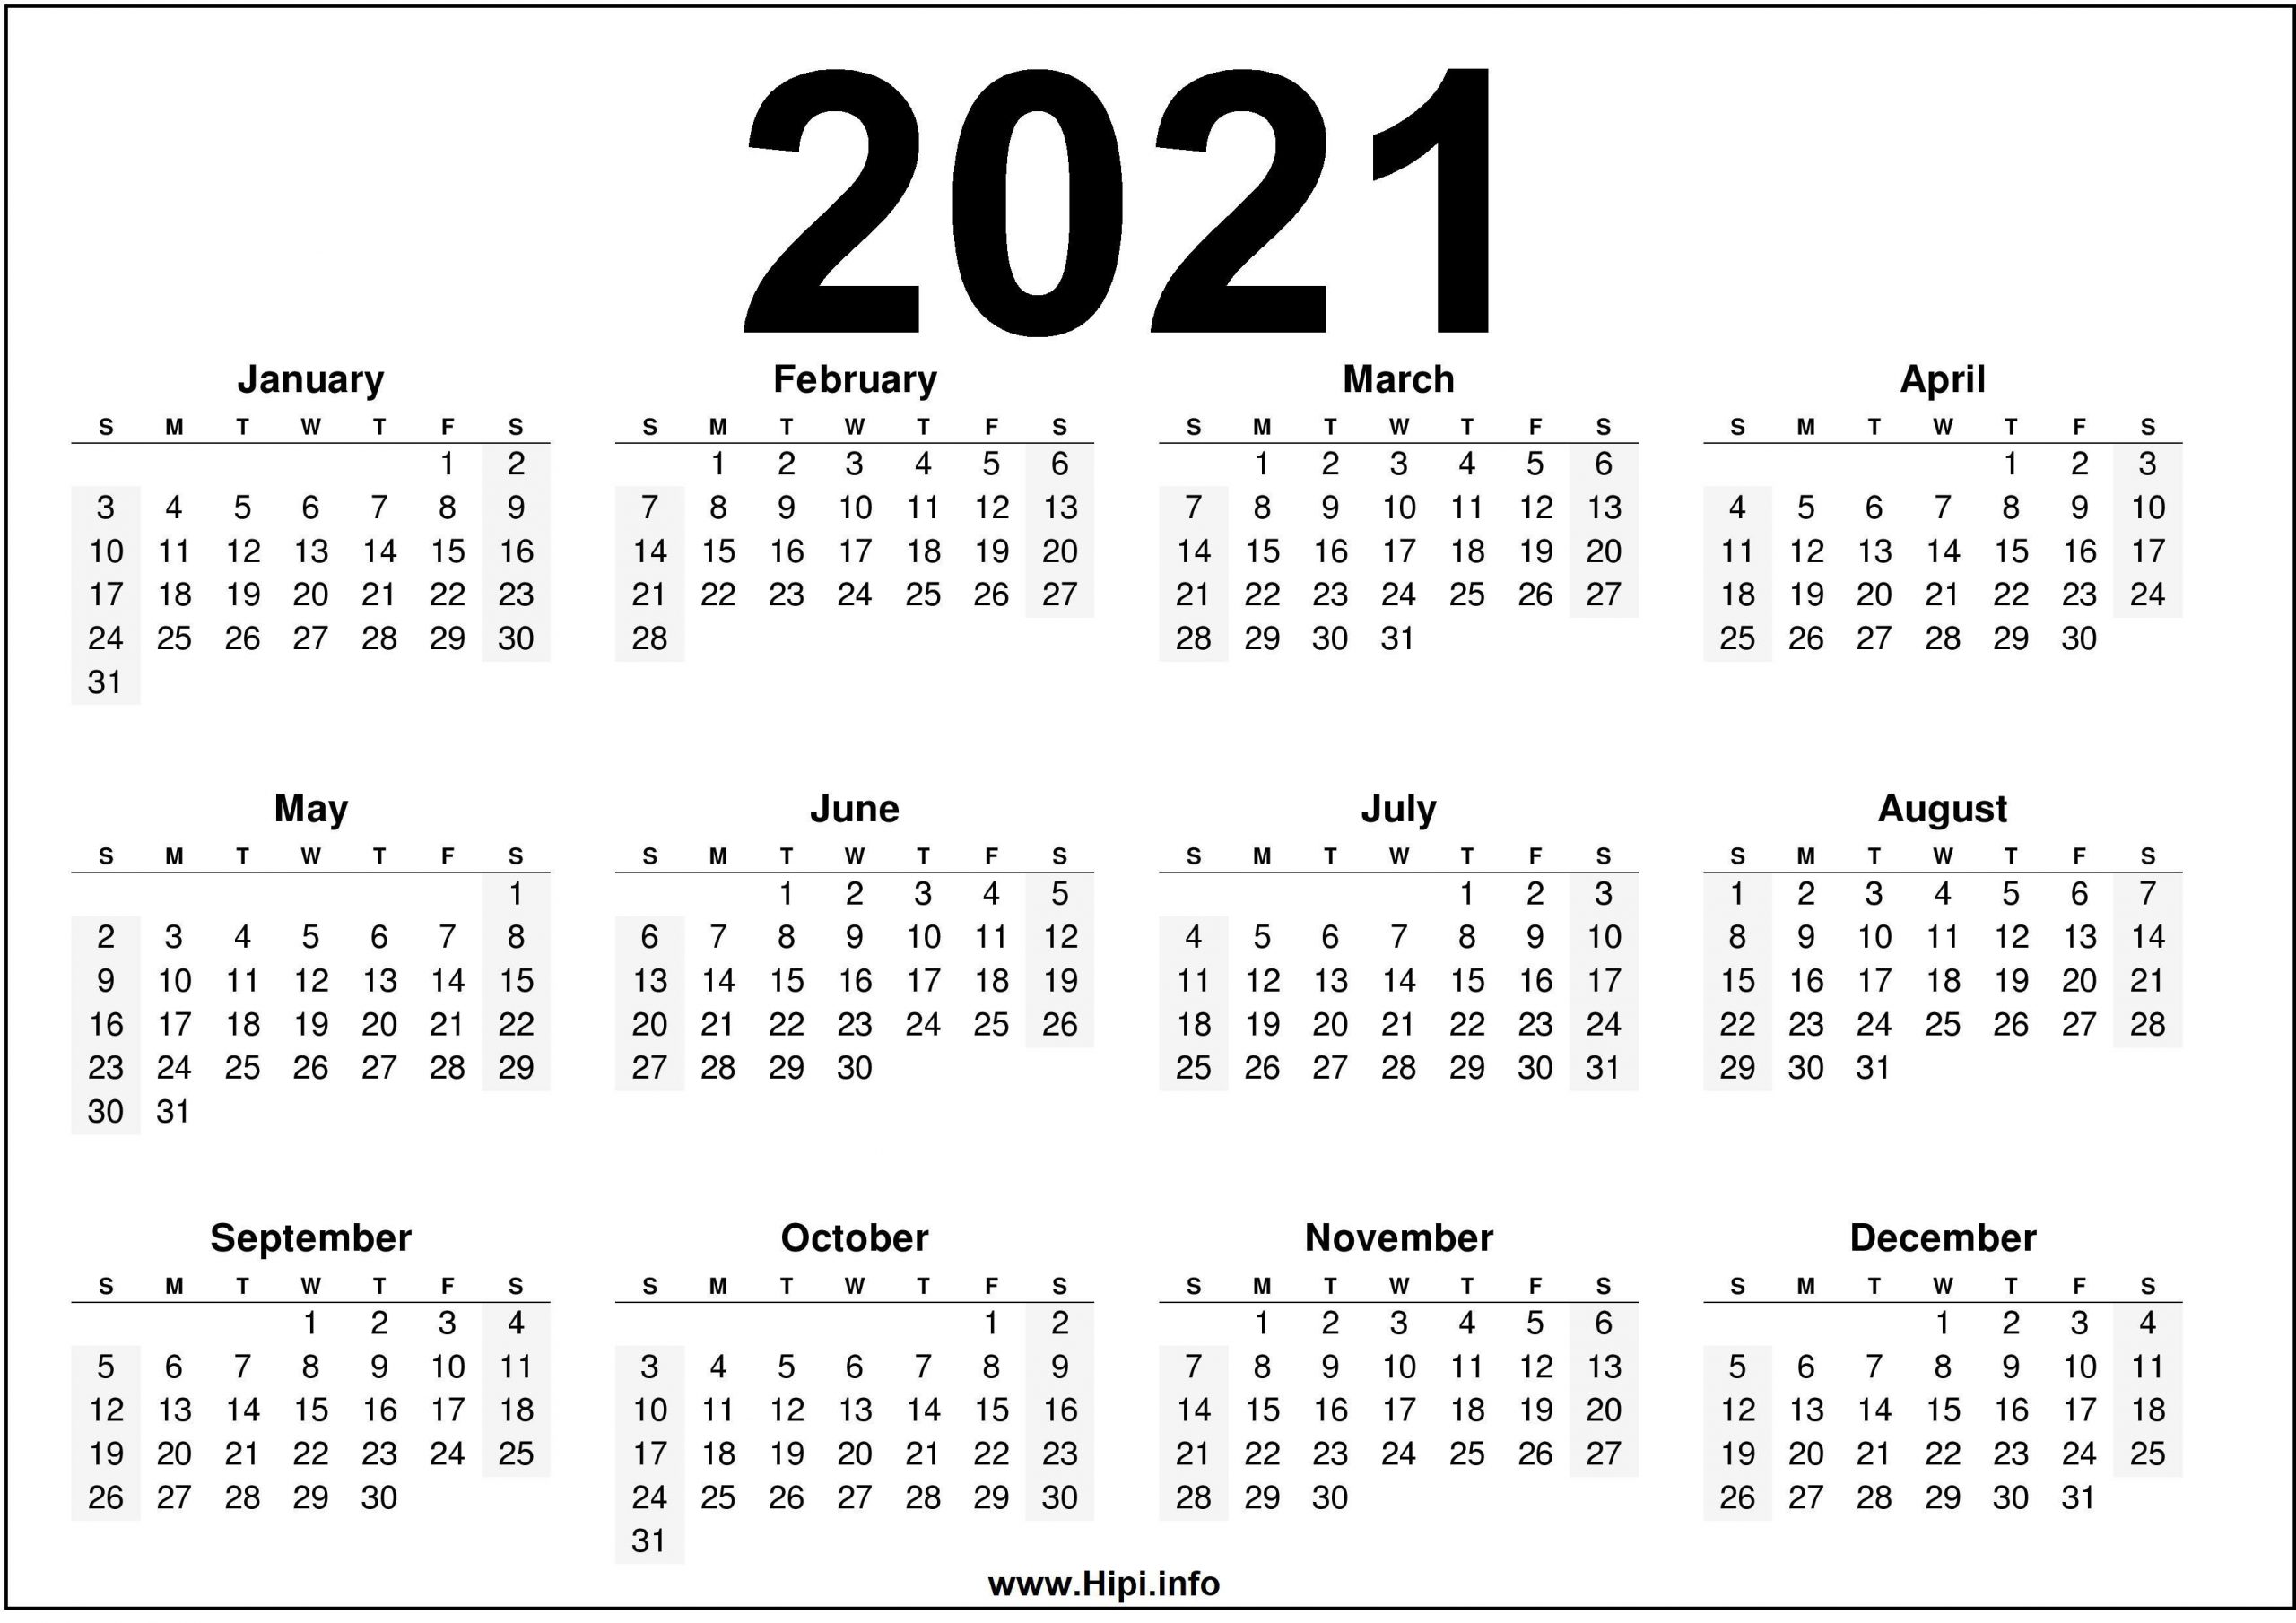 2021 calendar hd images download